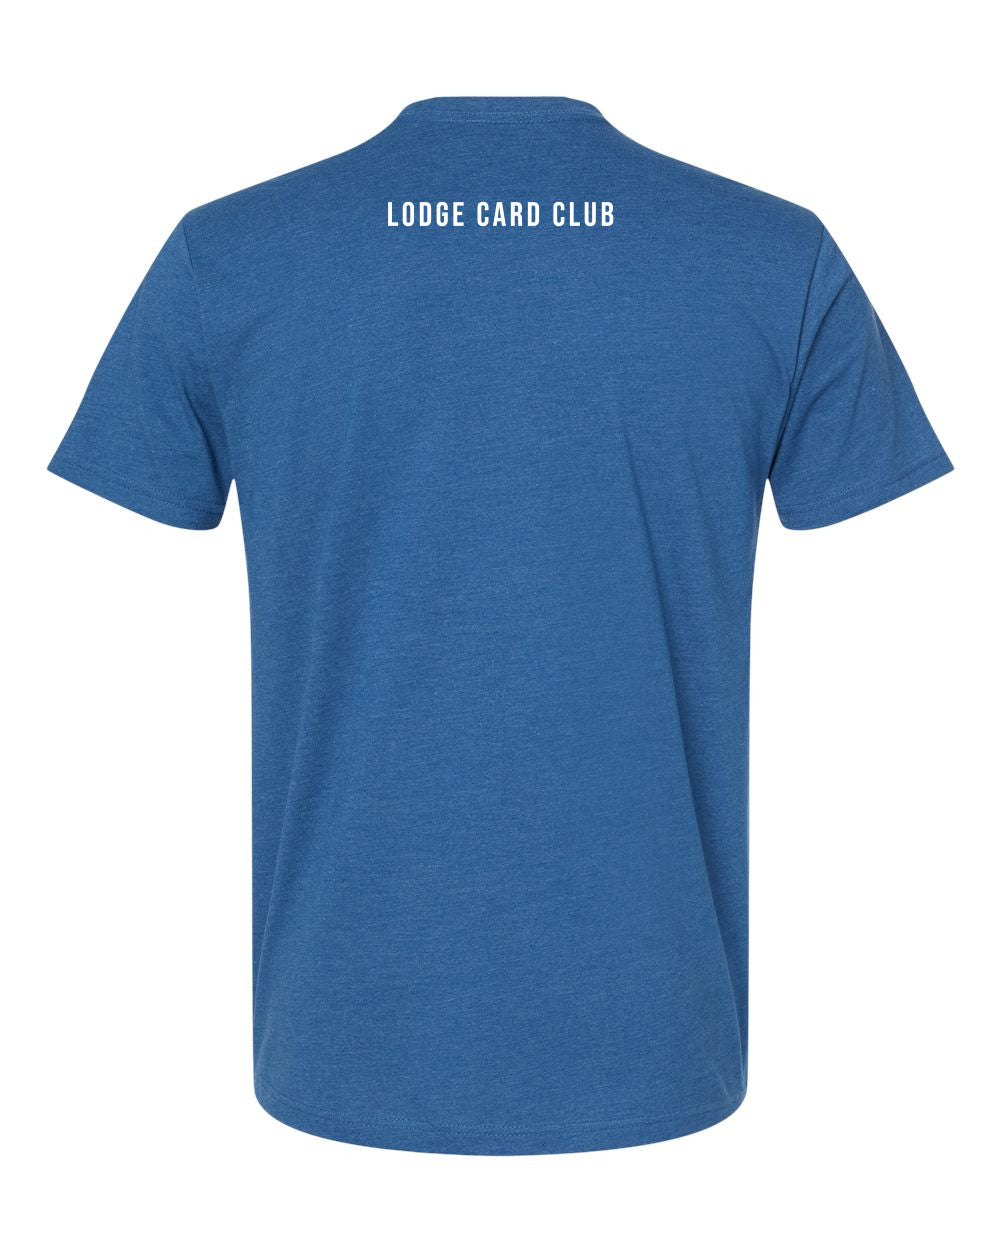 LCC Spade Shirt - Heather Cool Blue